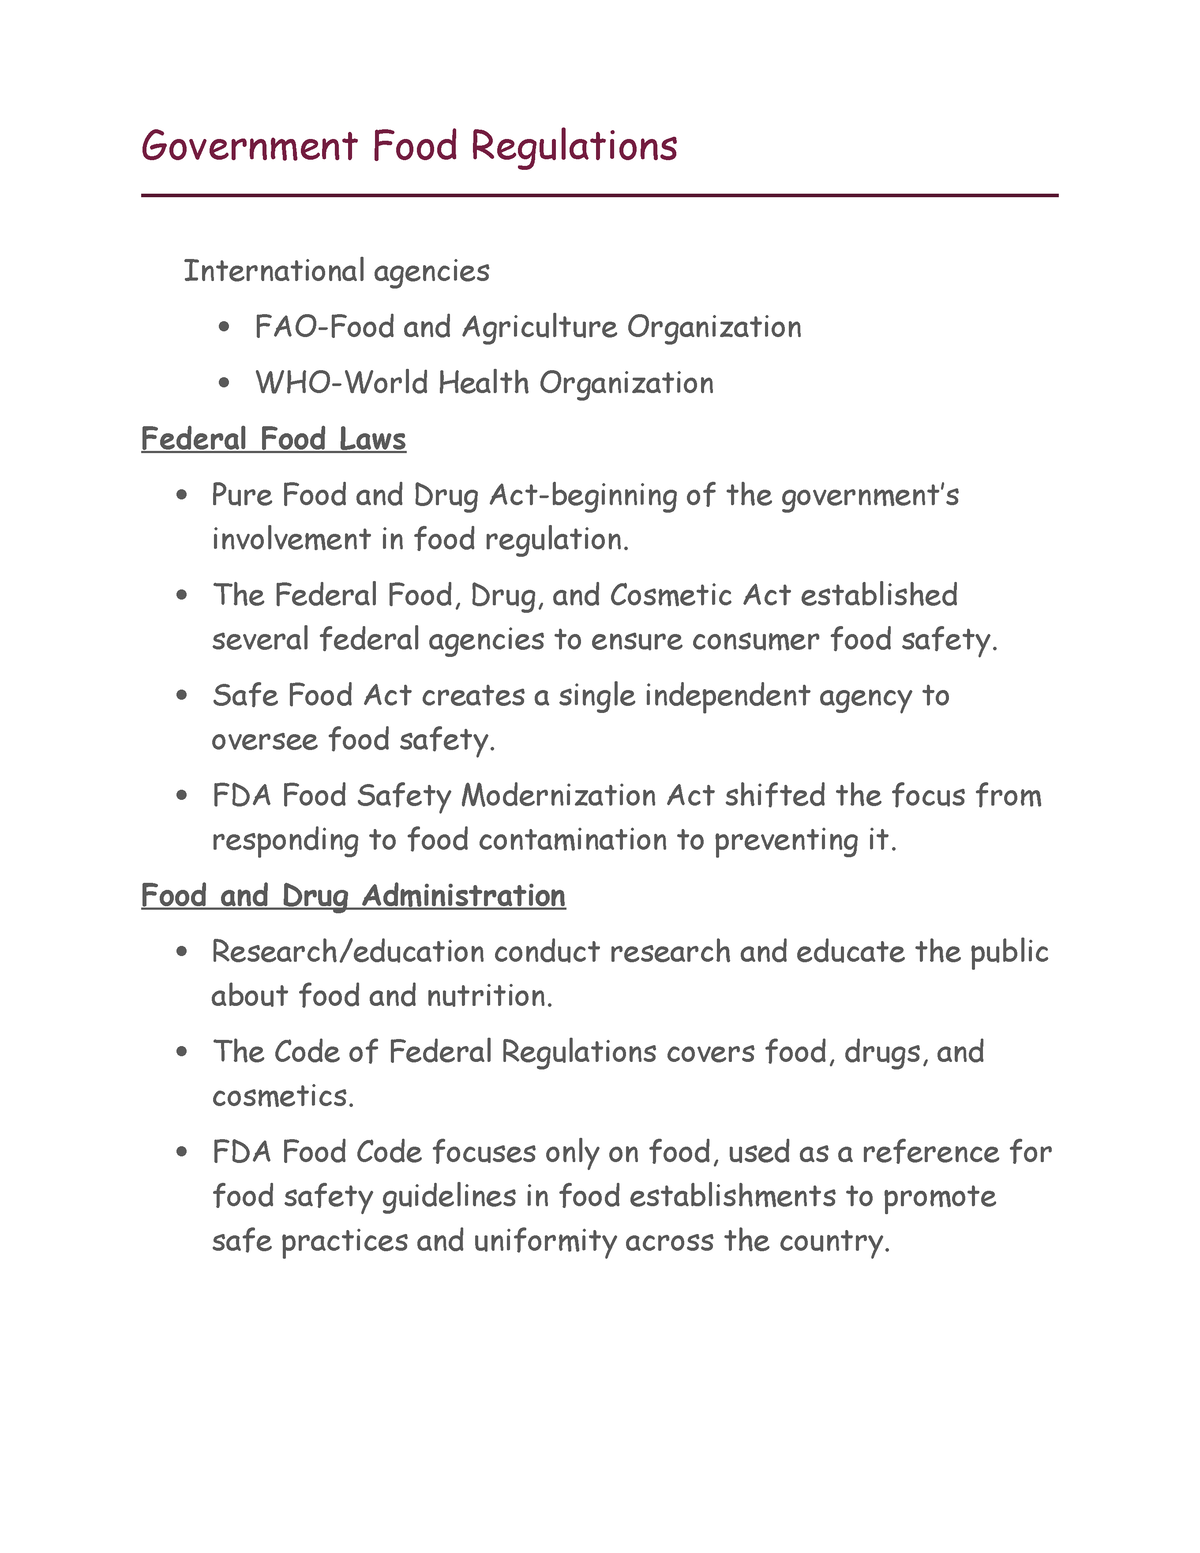 Government Food Regulations - Government Food Regulations International ...